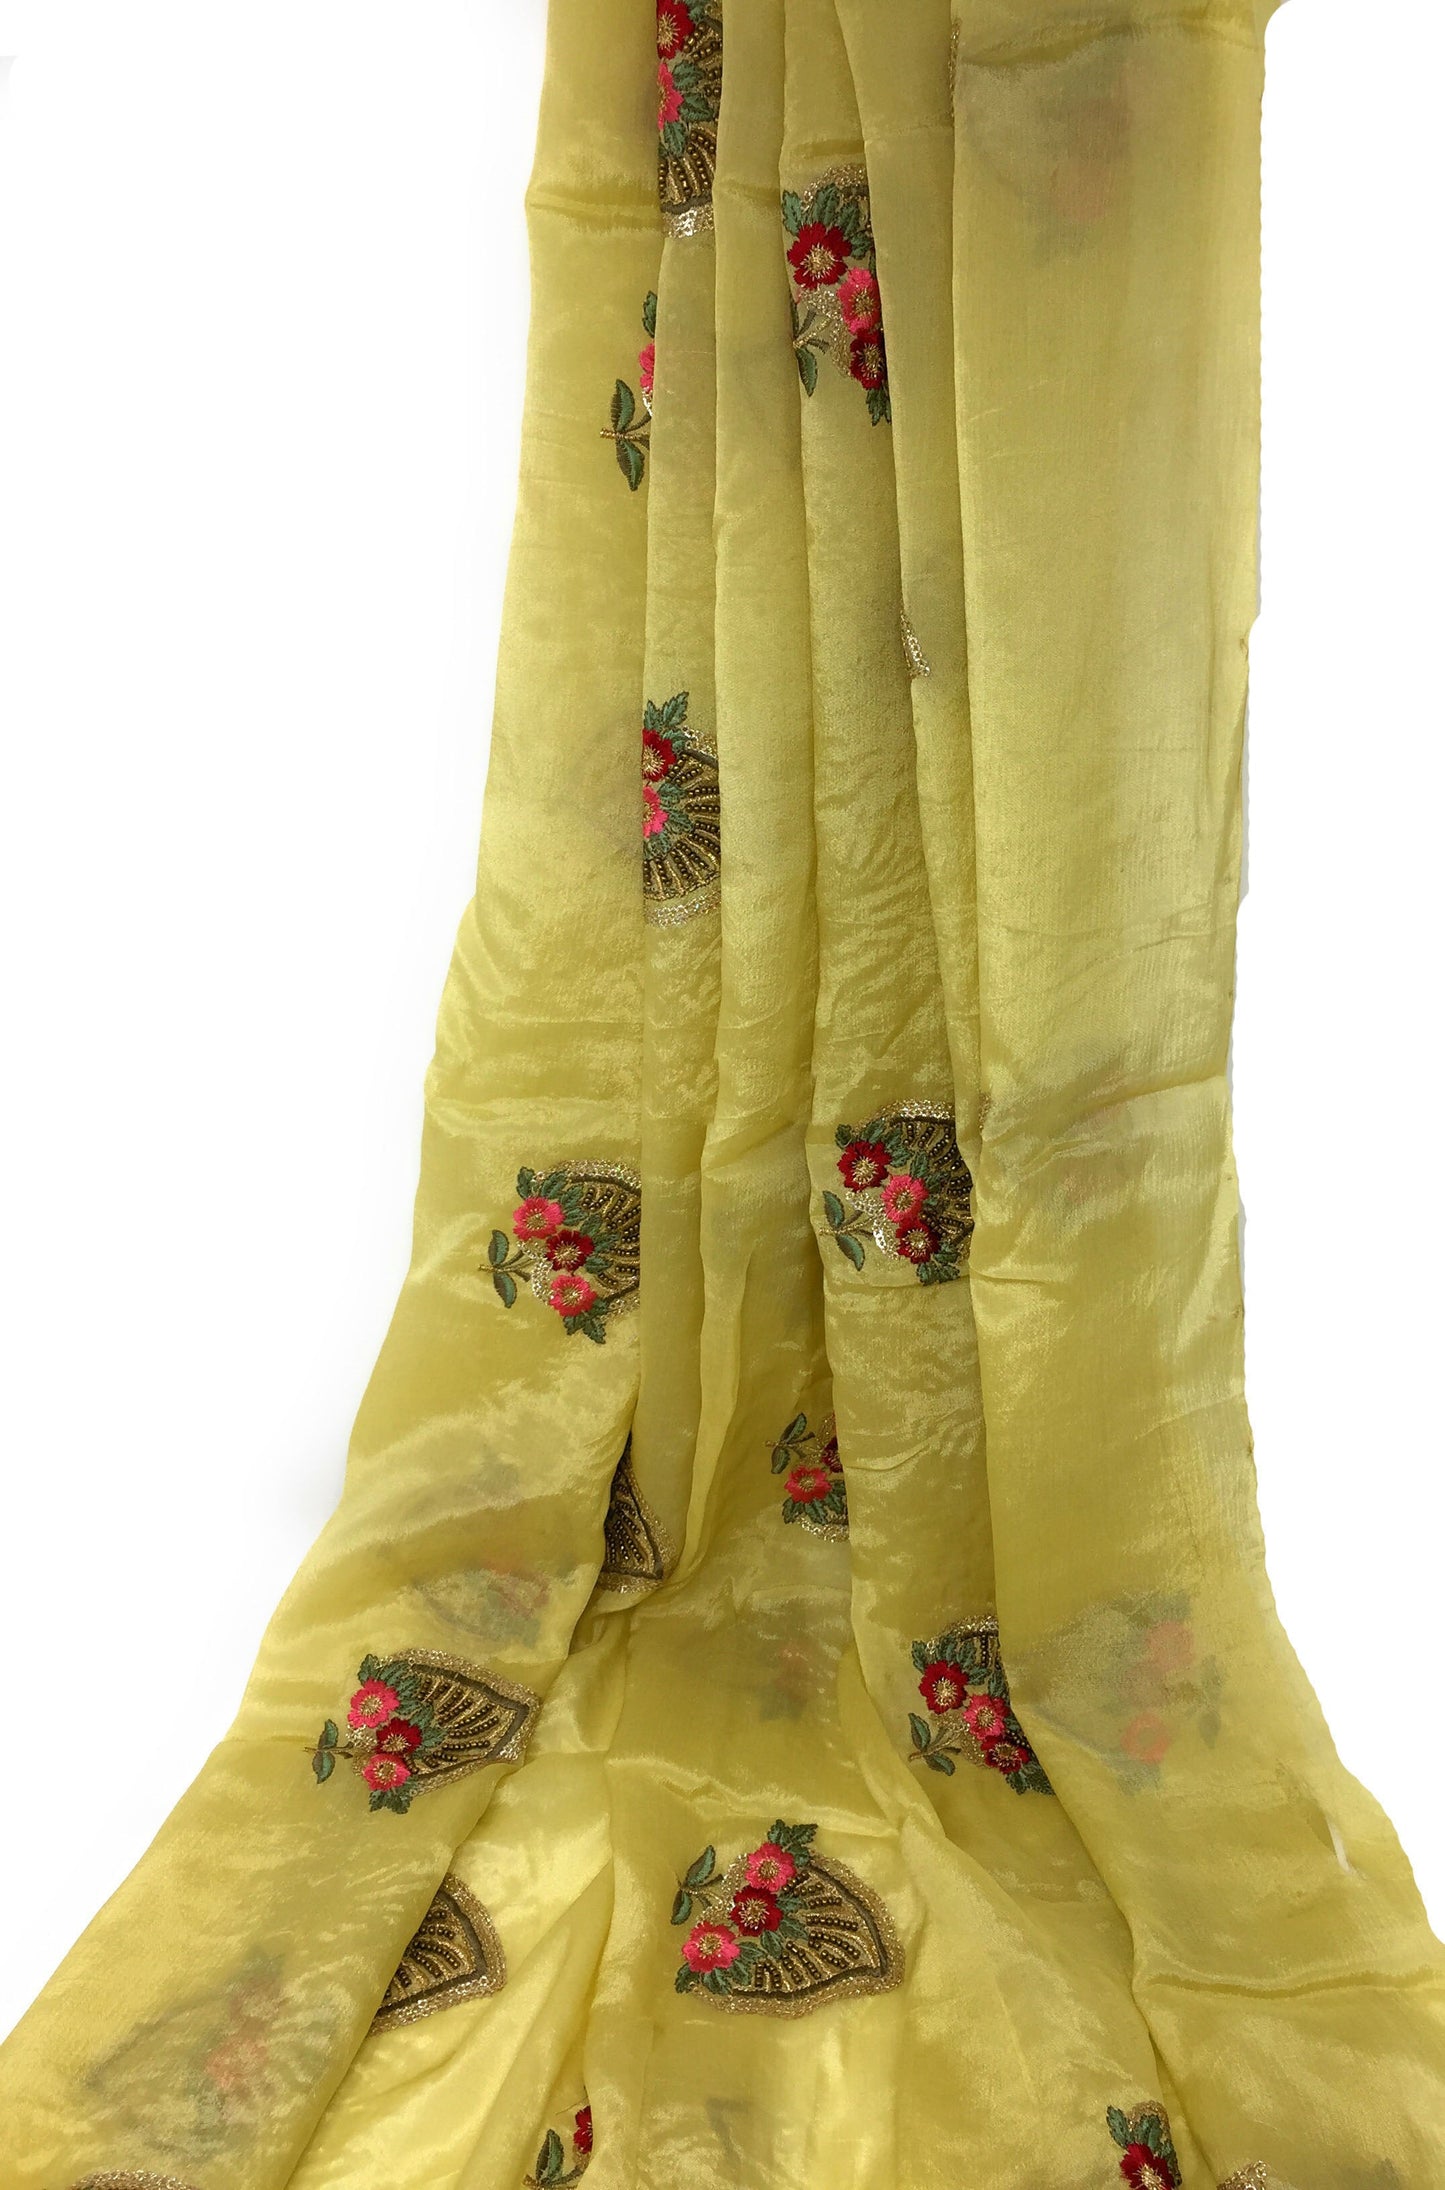 Yellow Chiffon fabric with embroidery